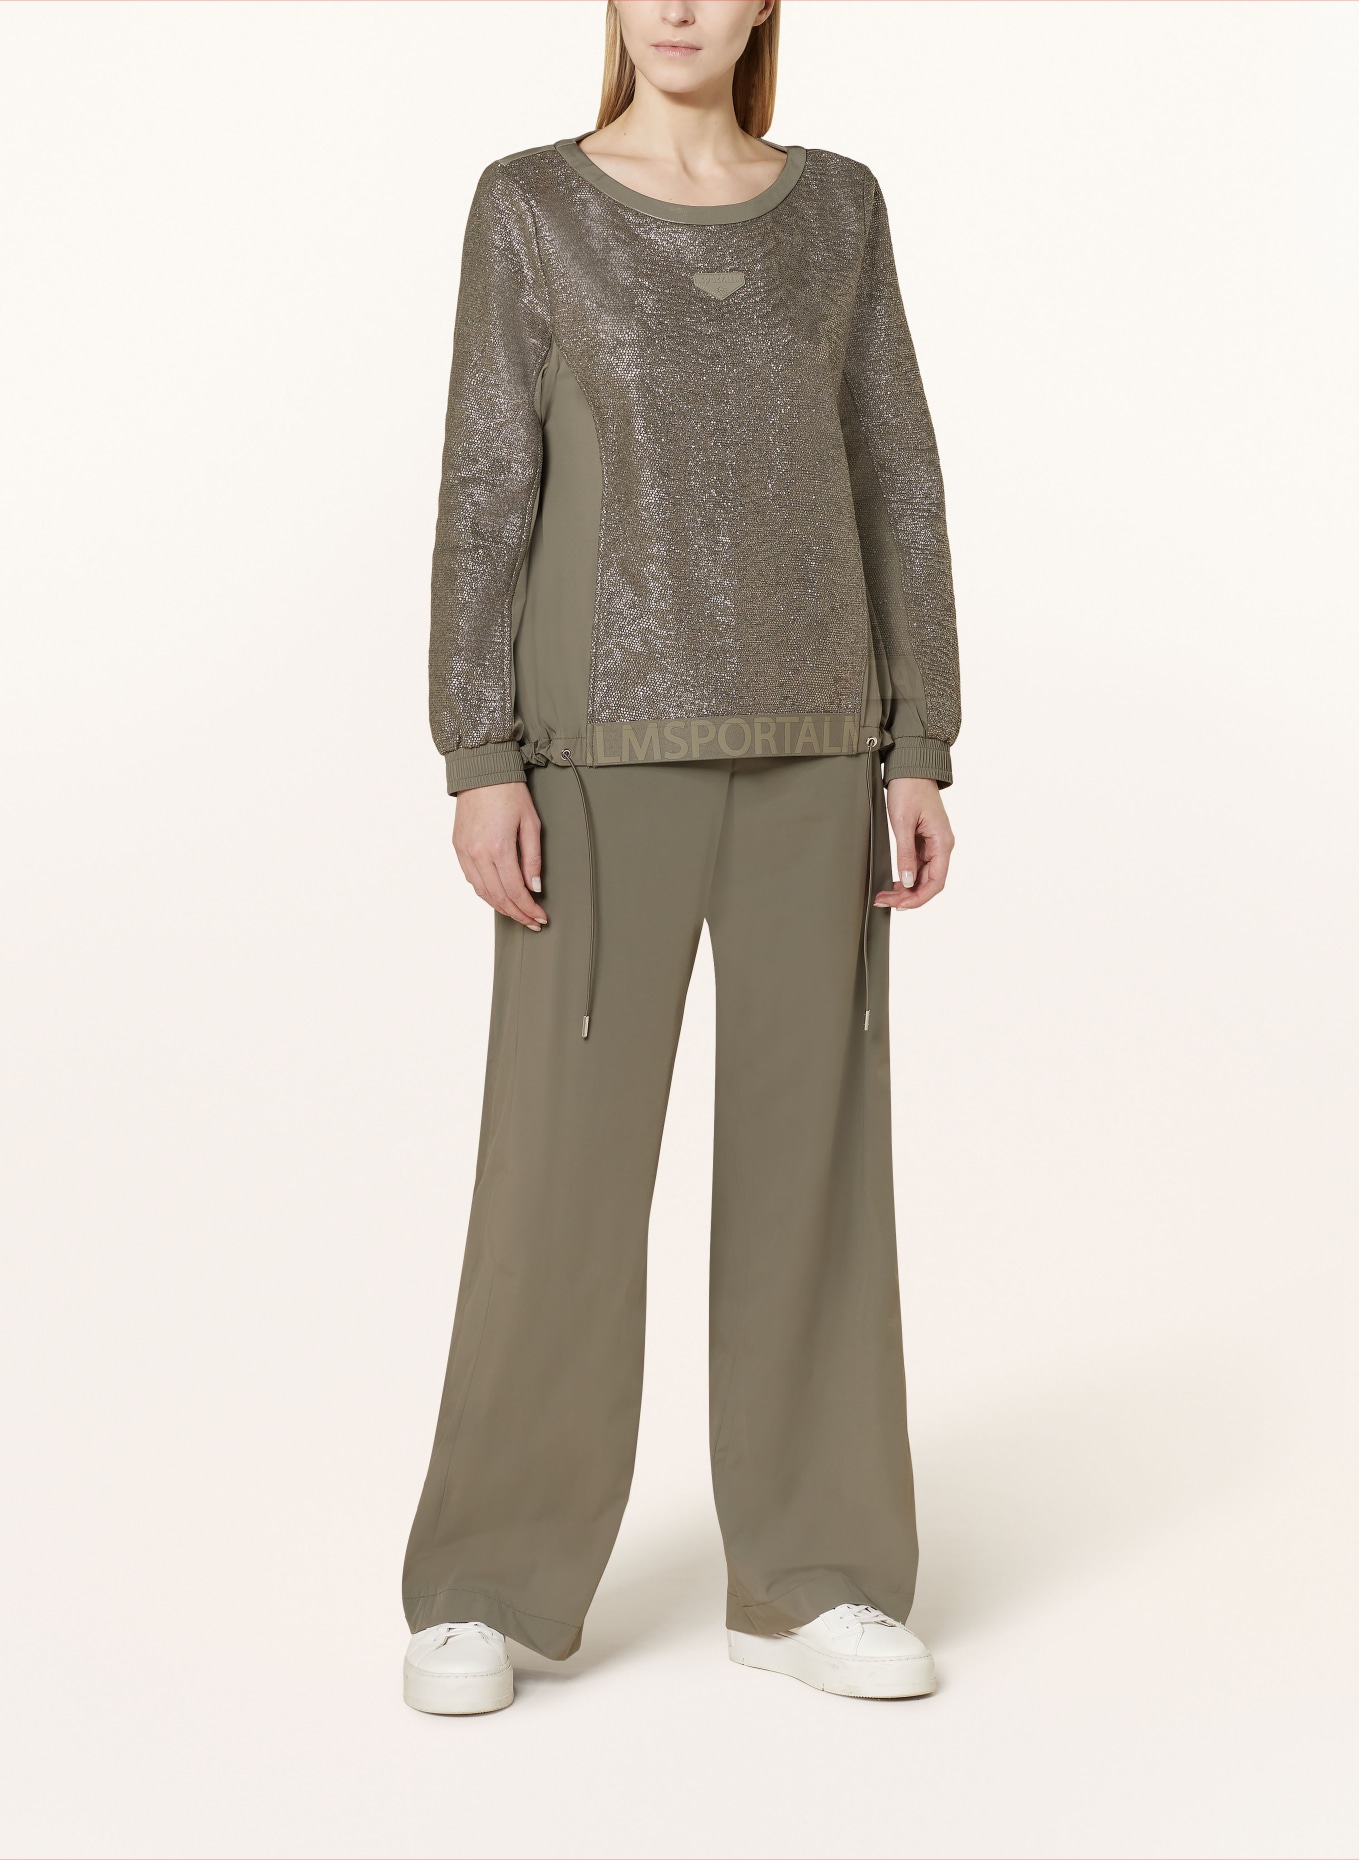 ULLI EHRLICH SPORTALM Sweatshirt in mixed materials, Color: KHAKI/ SILVER (Image 2)